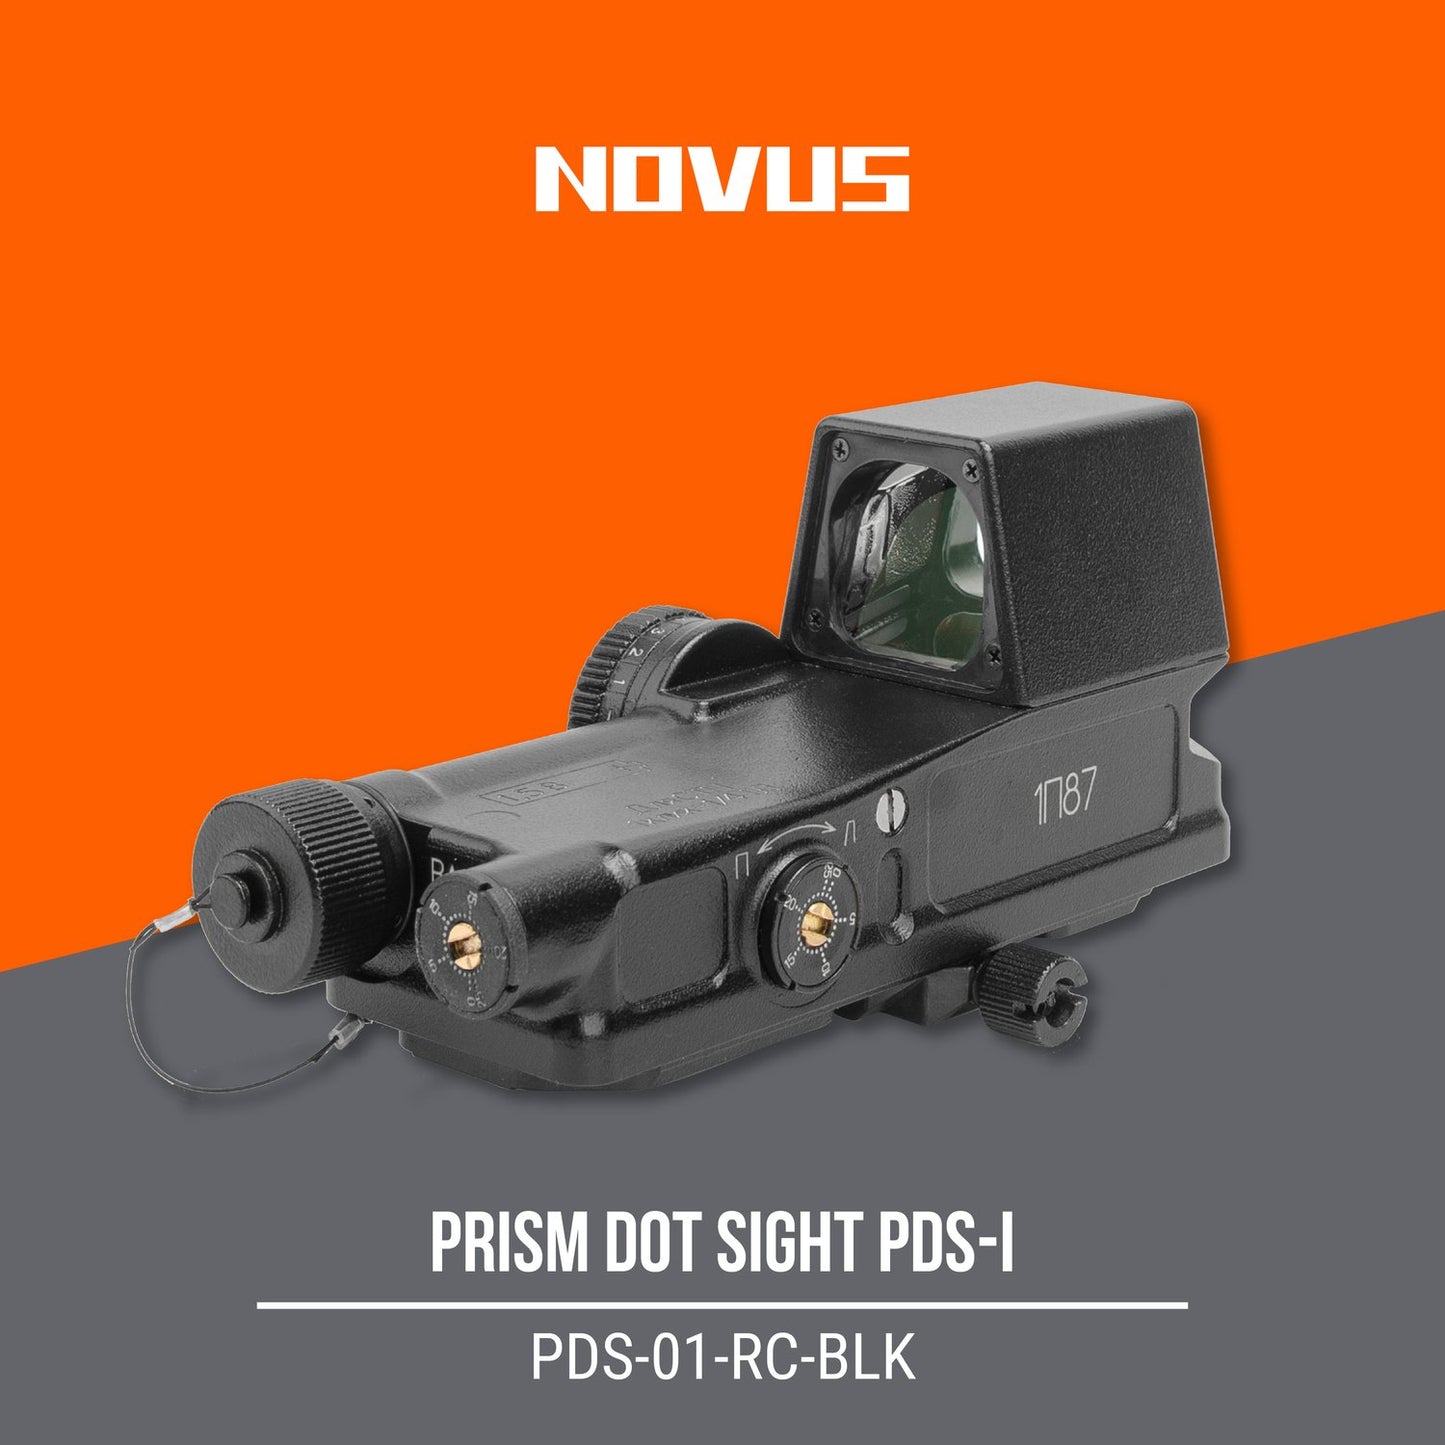 NOVUS PDS-1 Prism Dot Sight